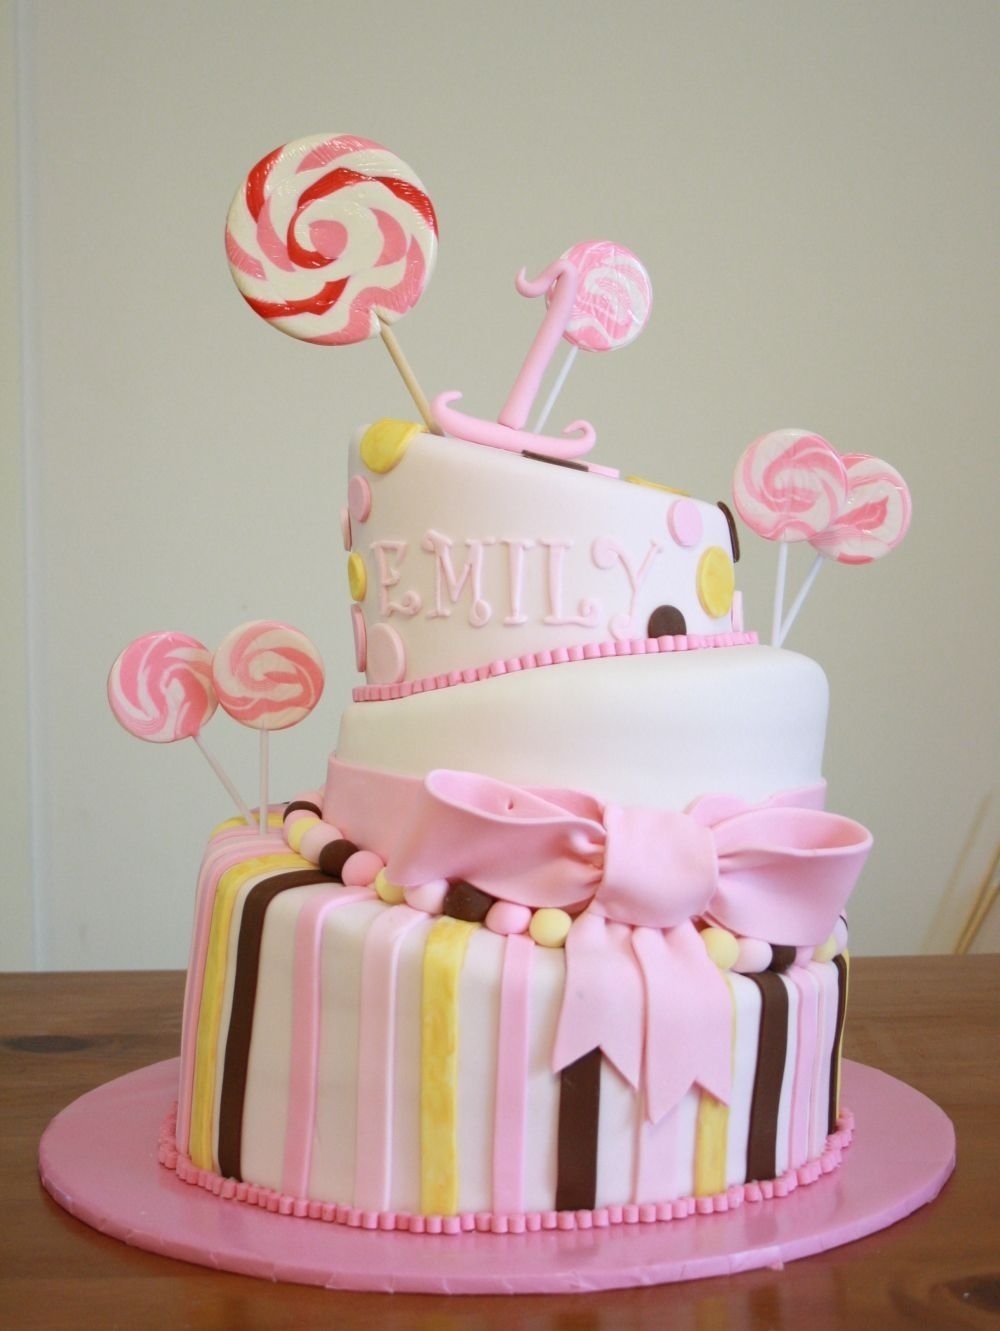 10 Amazing Little Girl Birthday Cake Ideas little girl birthday cakes images beccas musings my little girls 2022